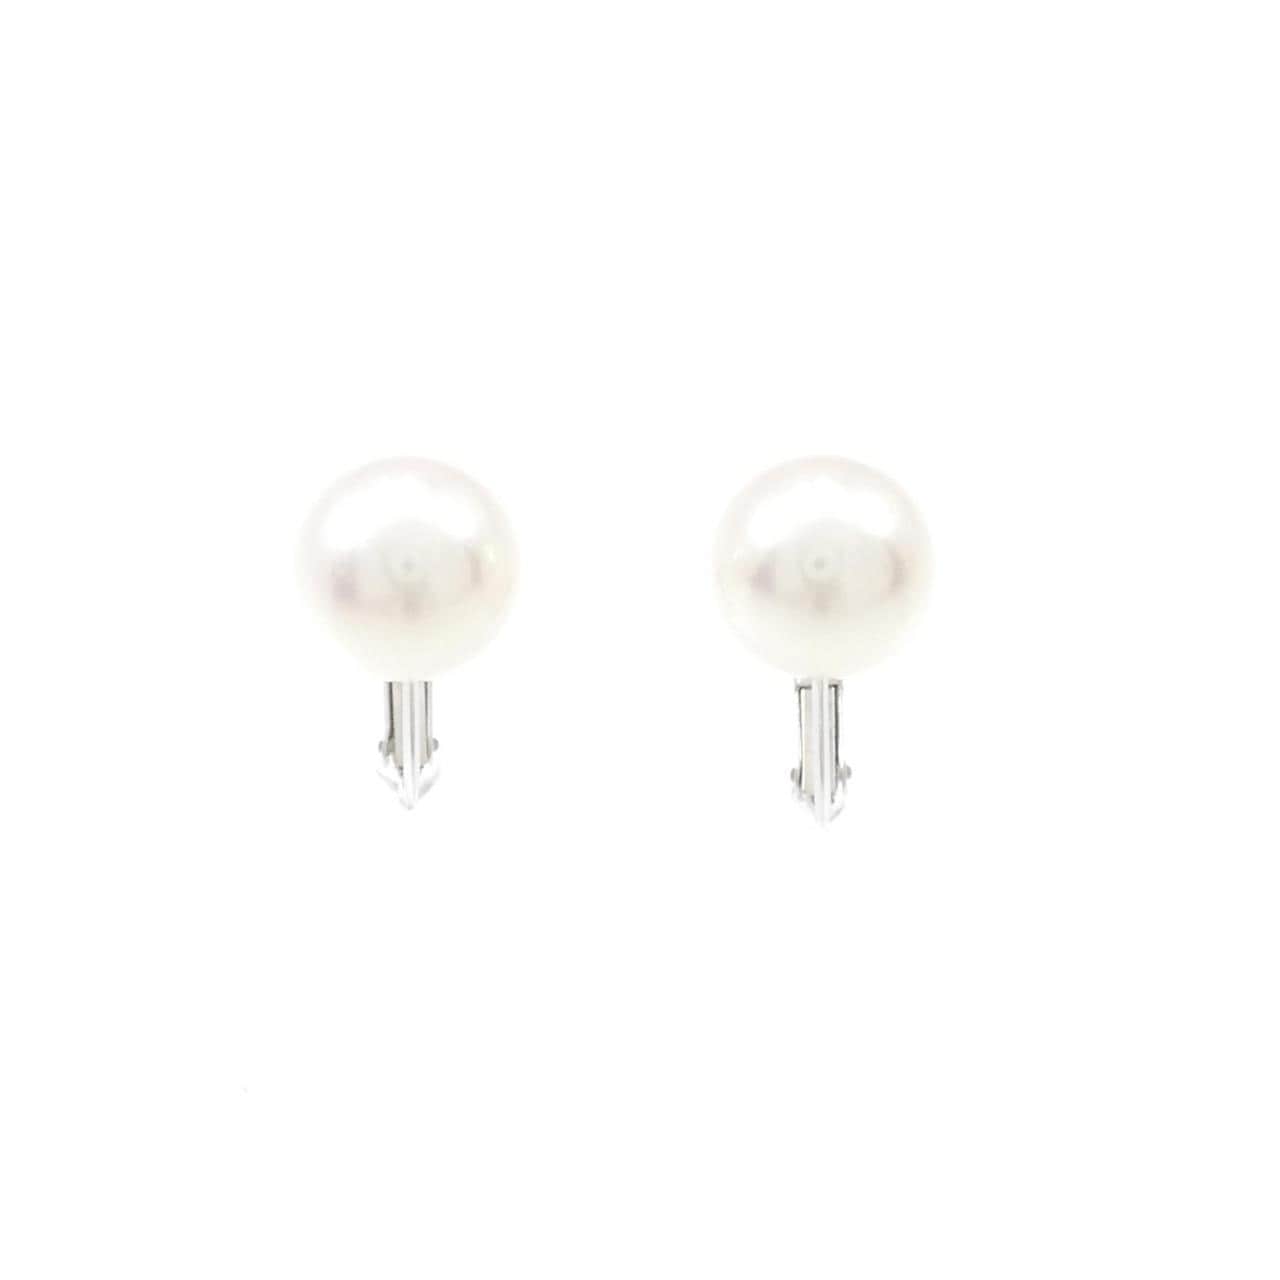 Akoya pearl necklace 9.5-10mm earrings set